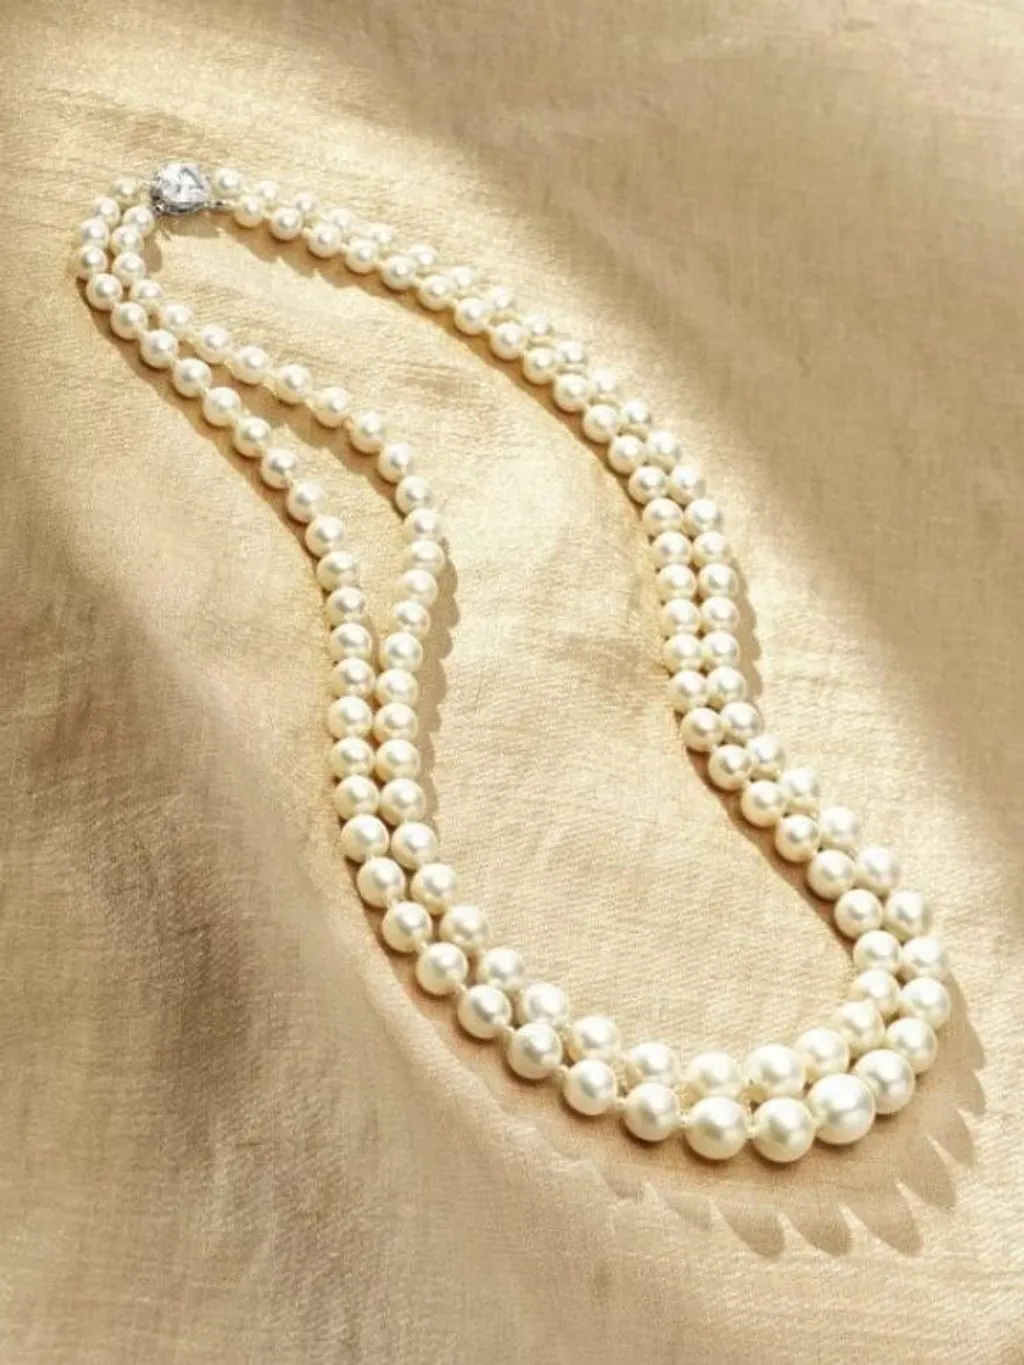 gyöngy fotók 6 Double Strand Pearls Necklace – $3.7 million 